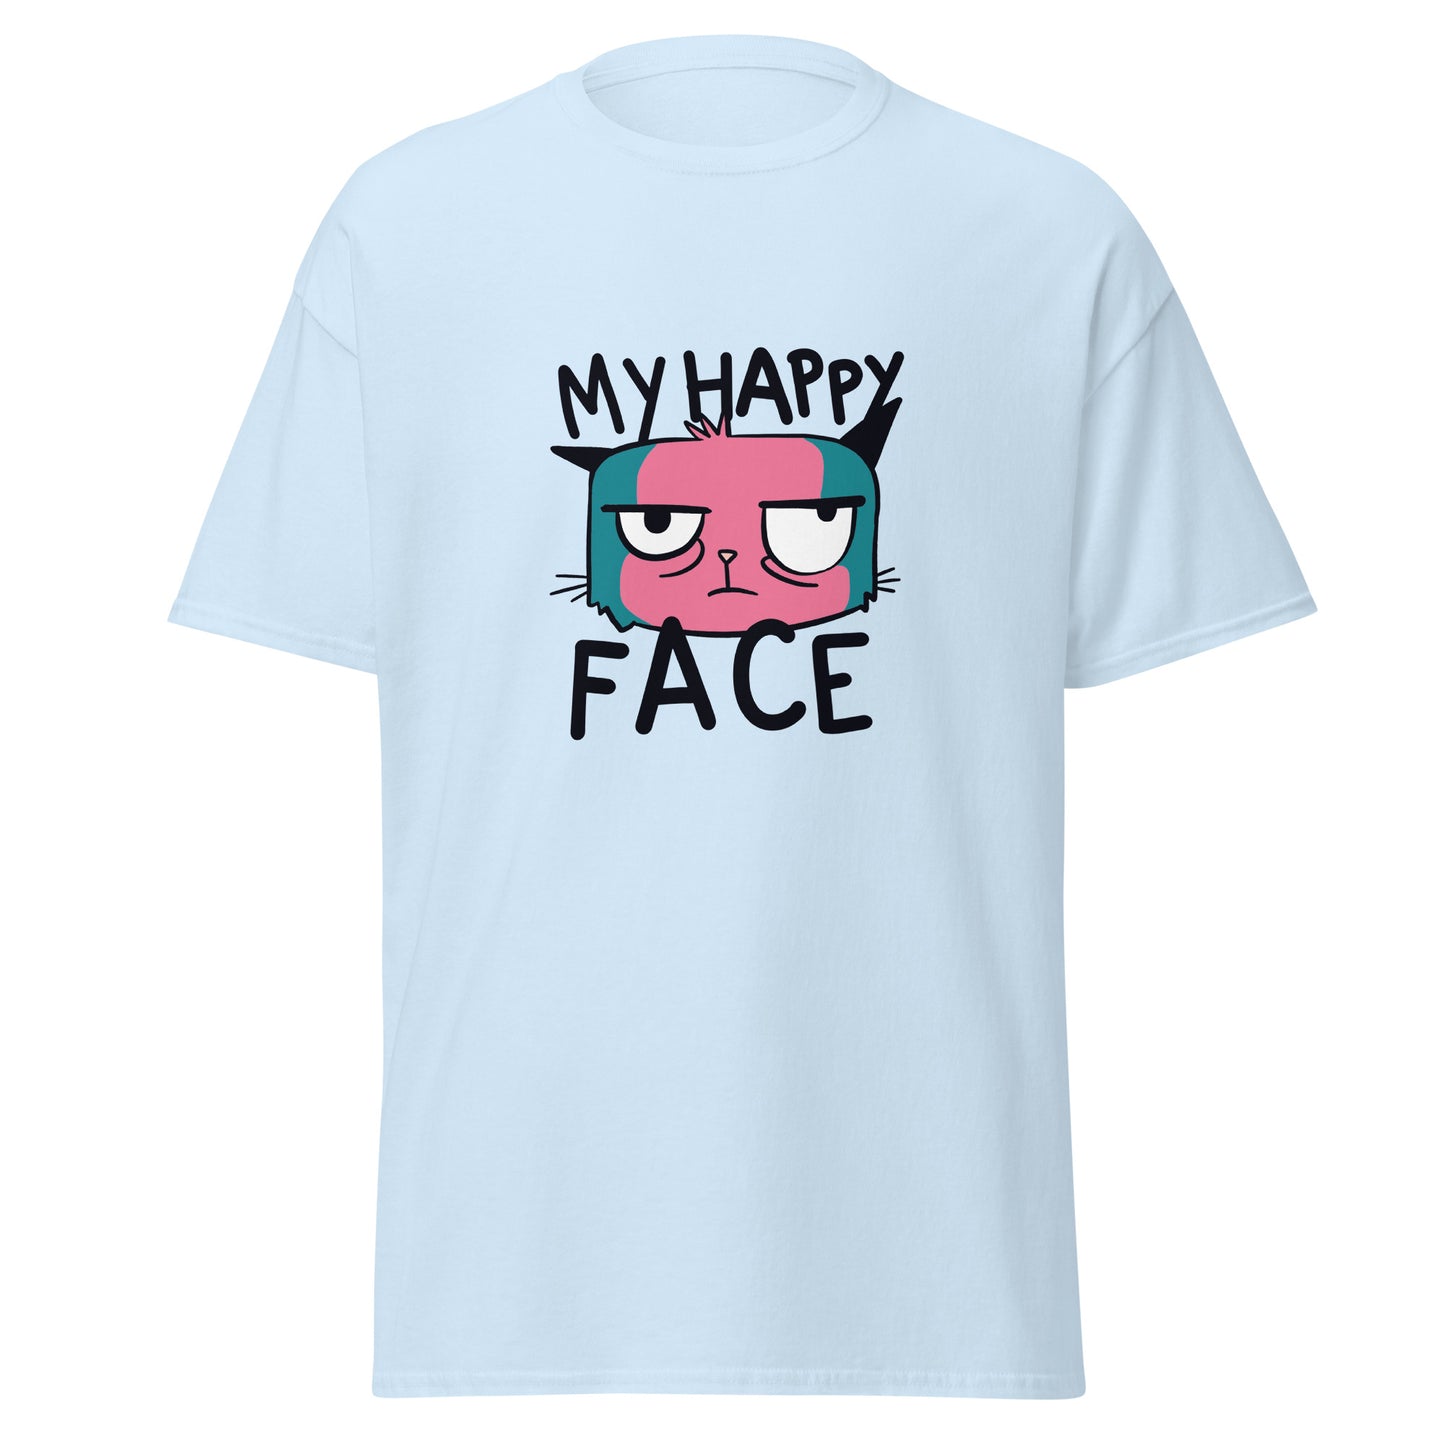 My happy face T-Shirt